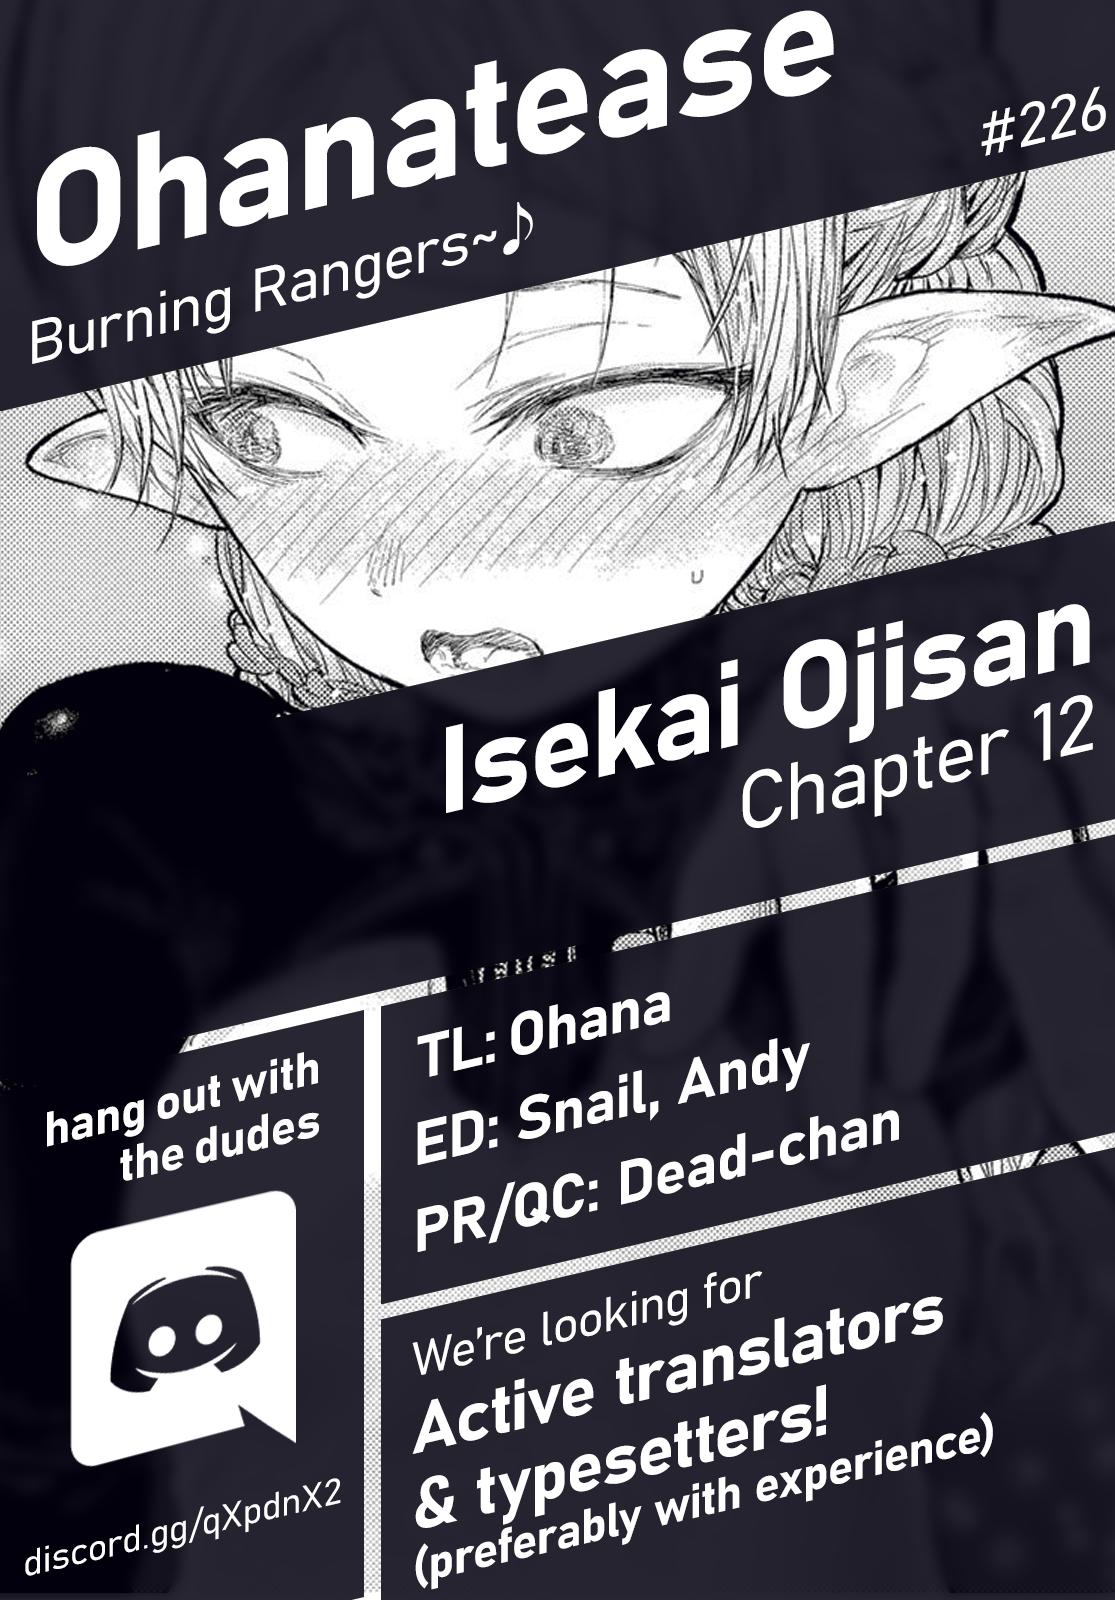 Read Isekai Ojisan Chapter 32 on Mangakakalot